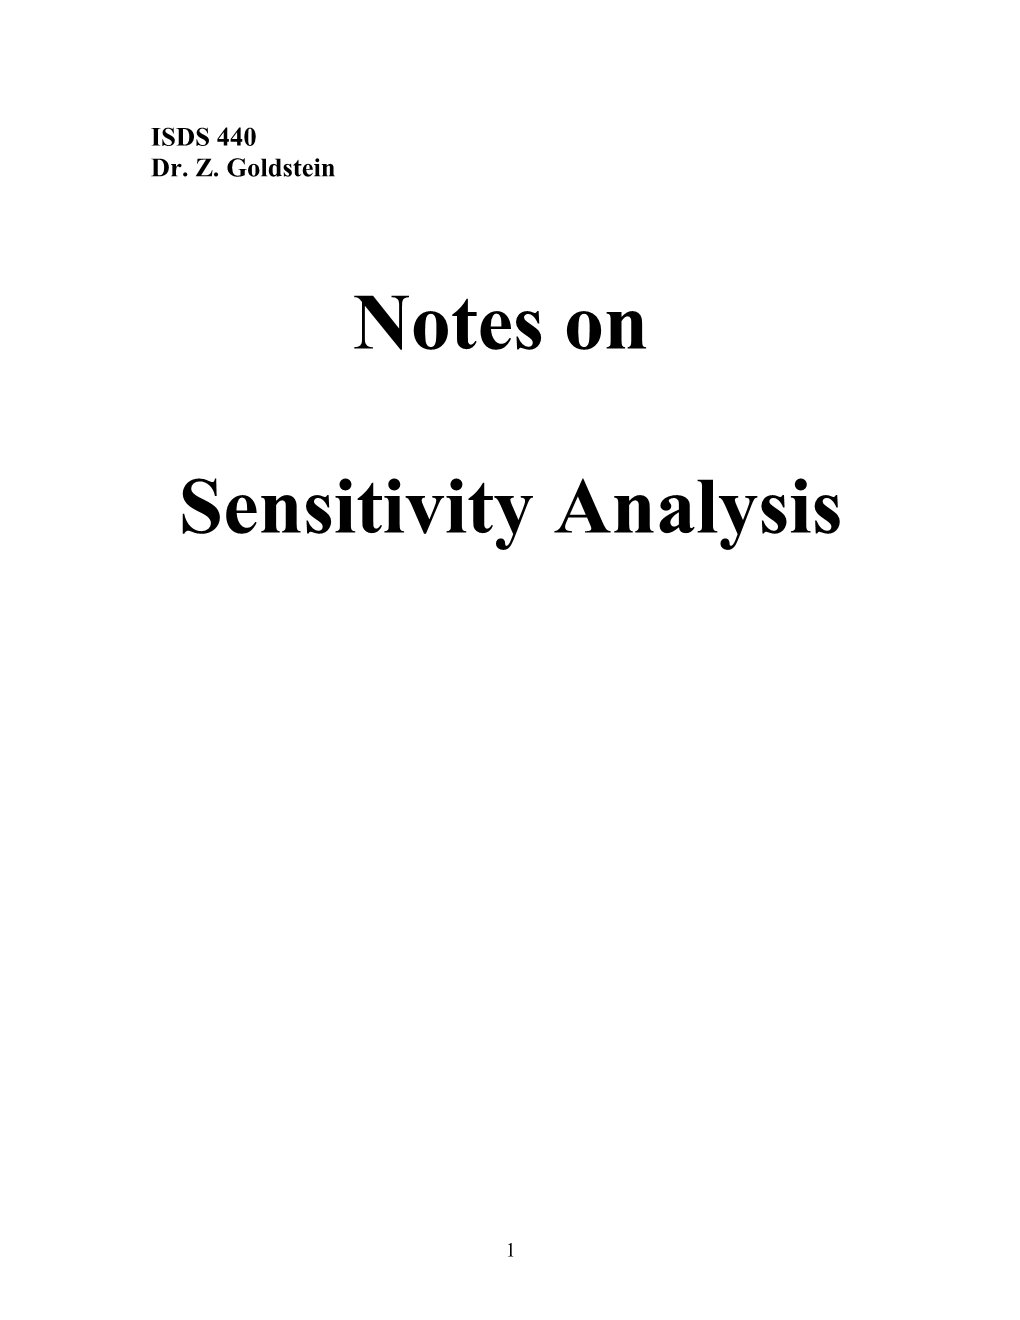 Notes on Sensitivity Analysis